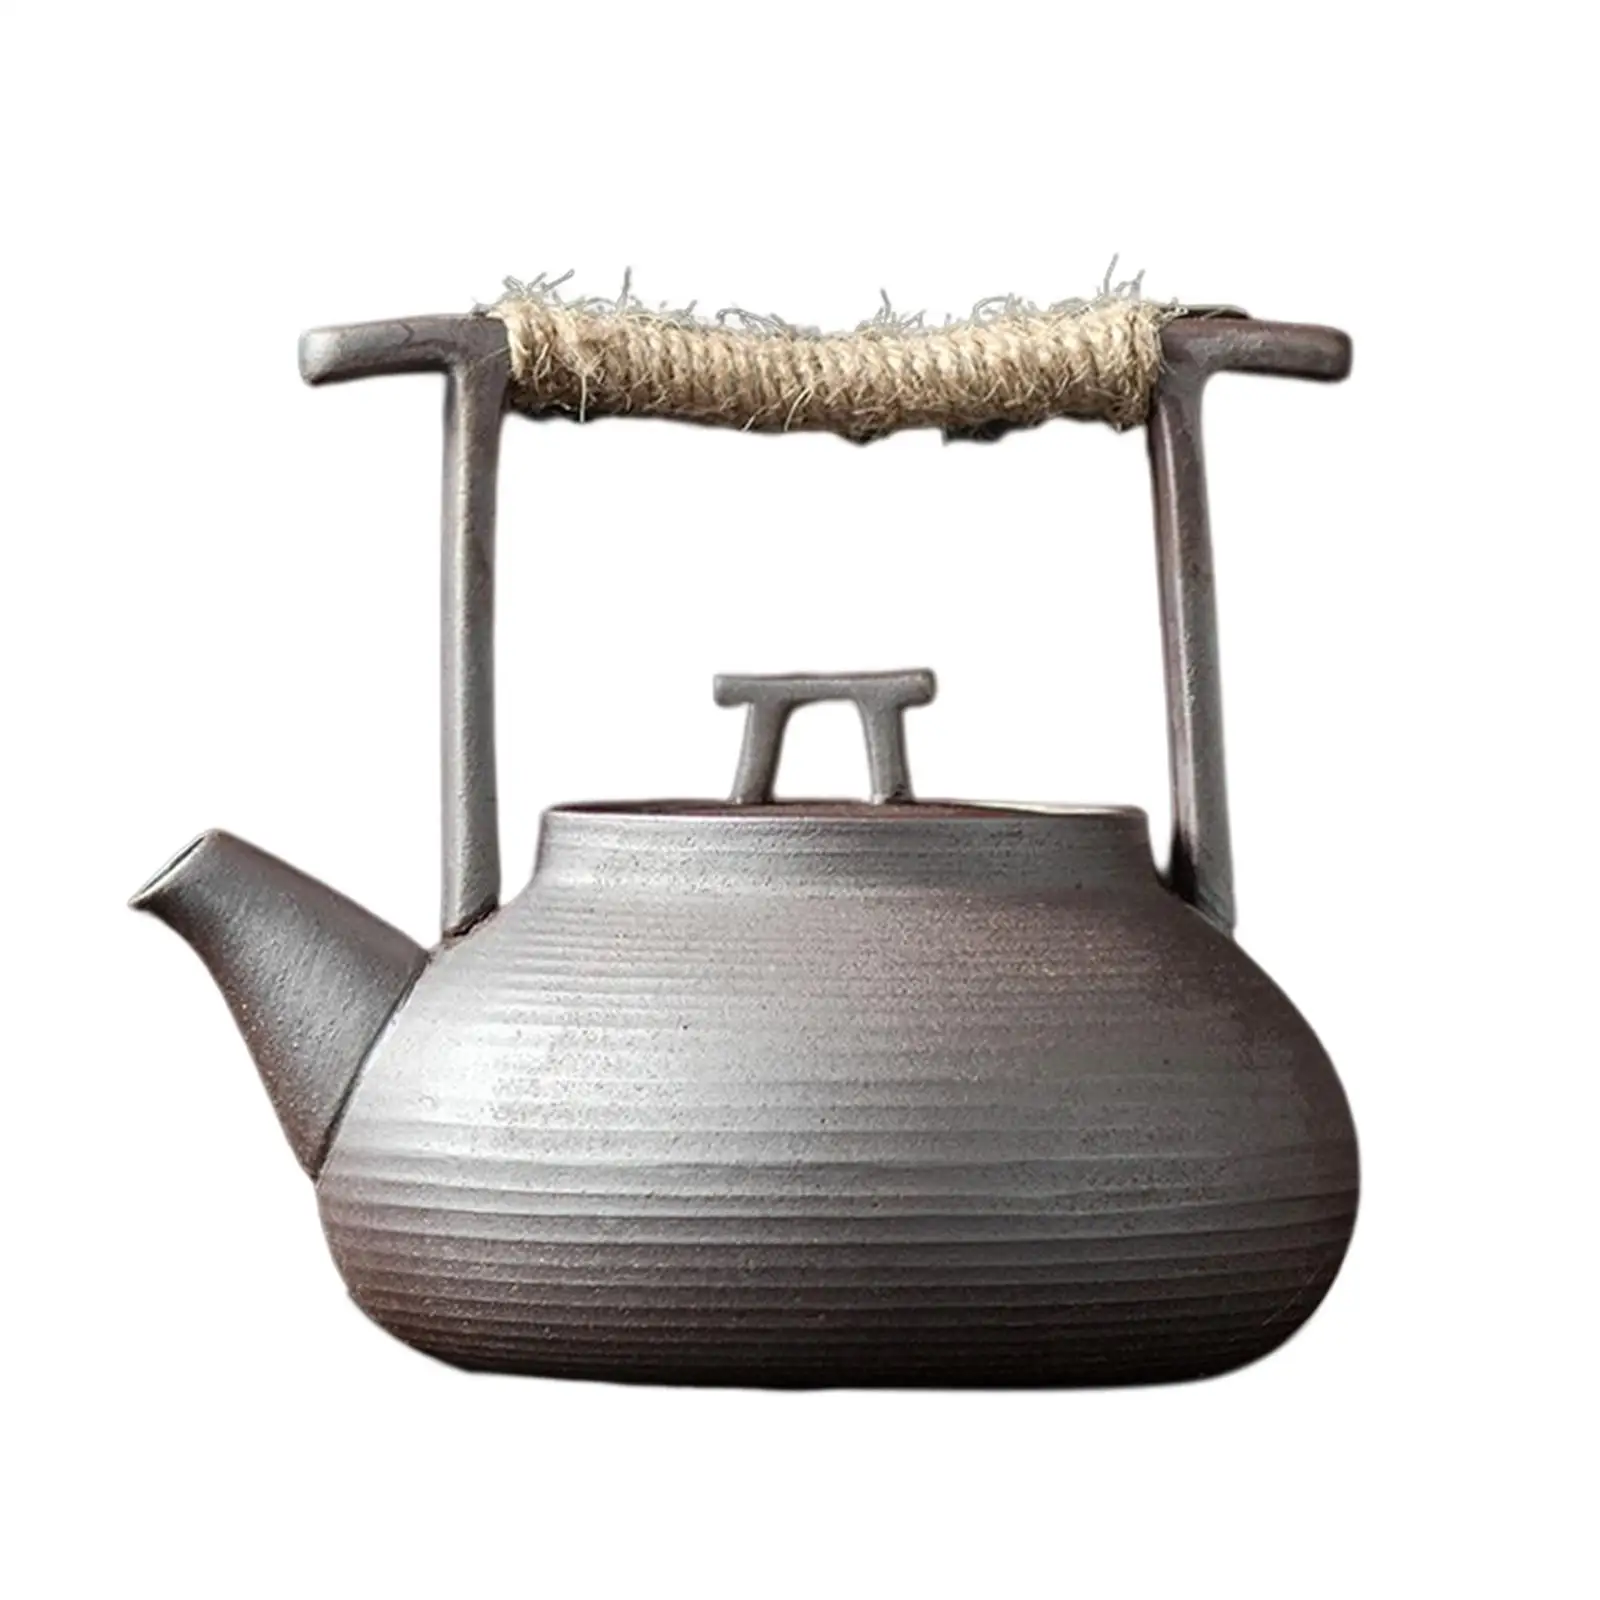 Ceramic Tea Kettle Water Kettle Tea Pot Ergonomic Handle Handmade Teapot Warmer for Home Kitchen Teahouse Dining Room Picnic